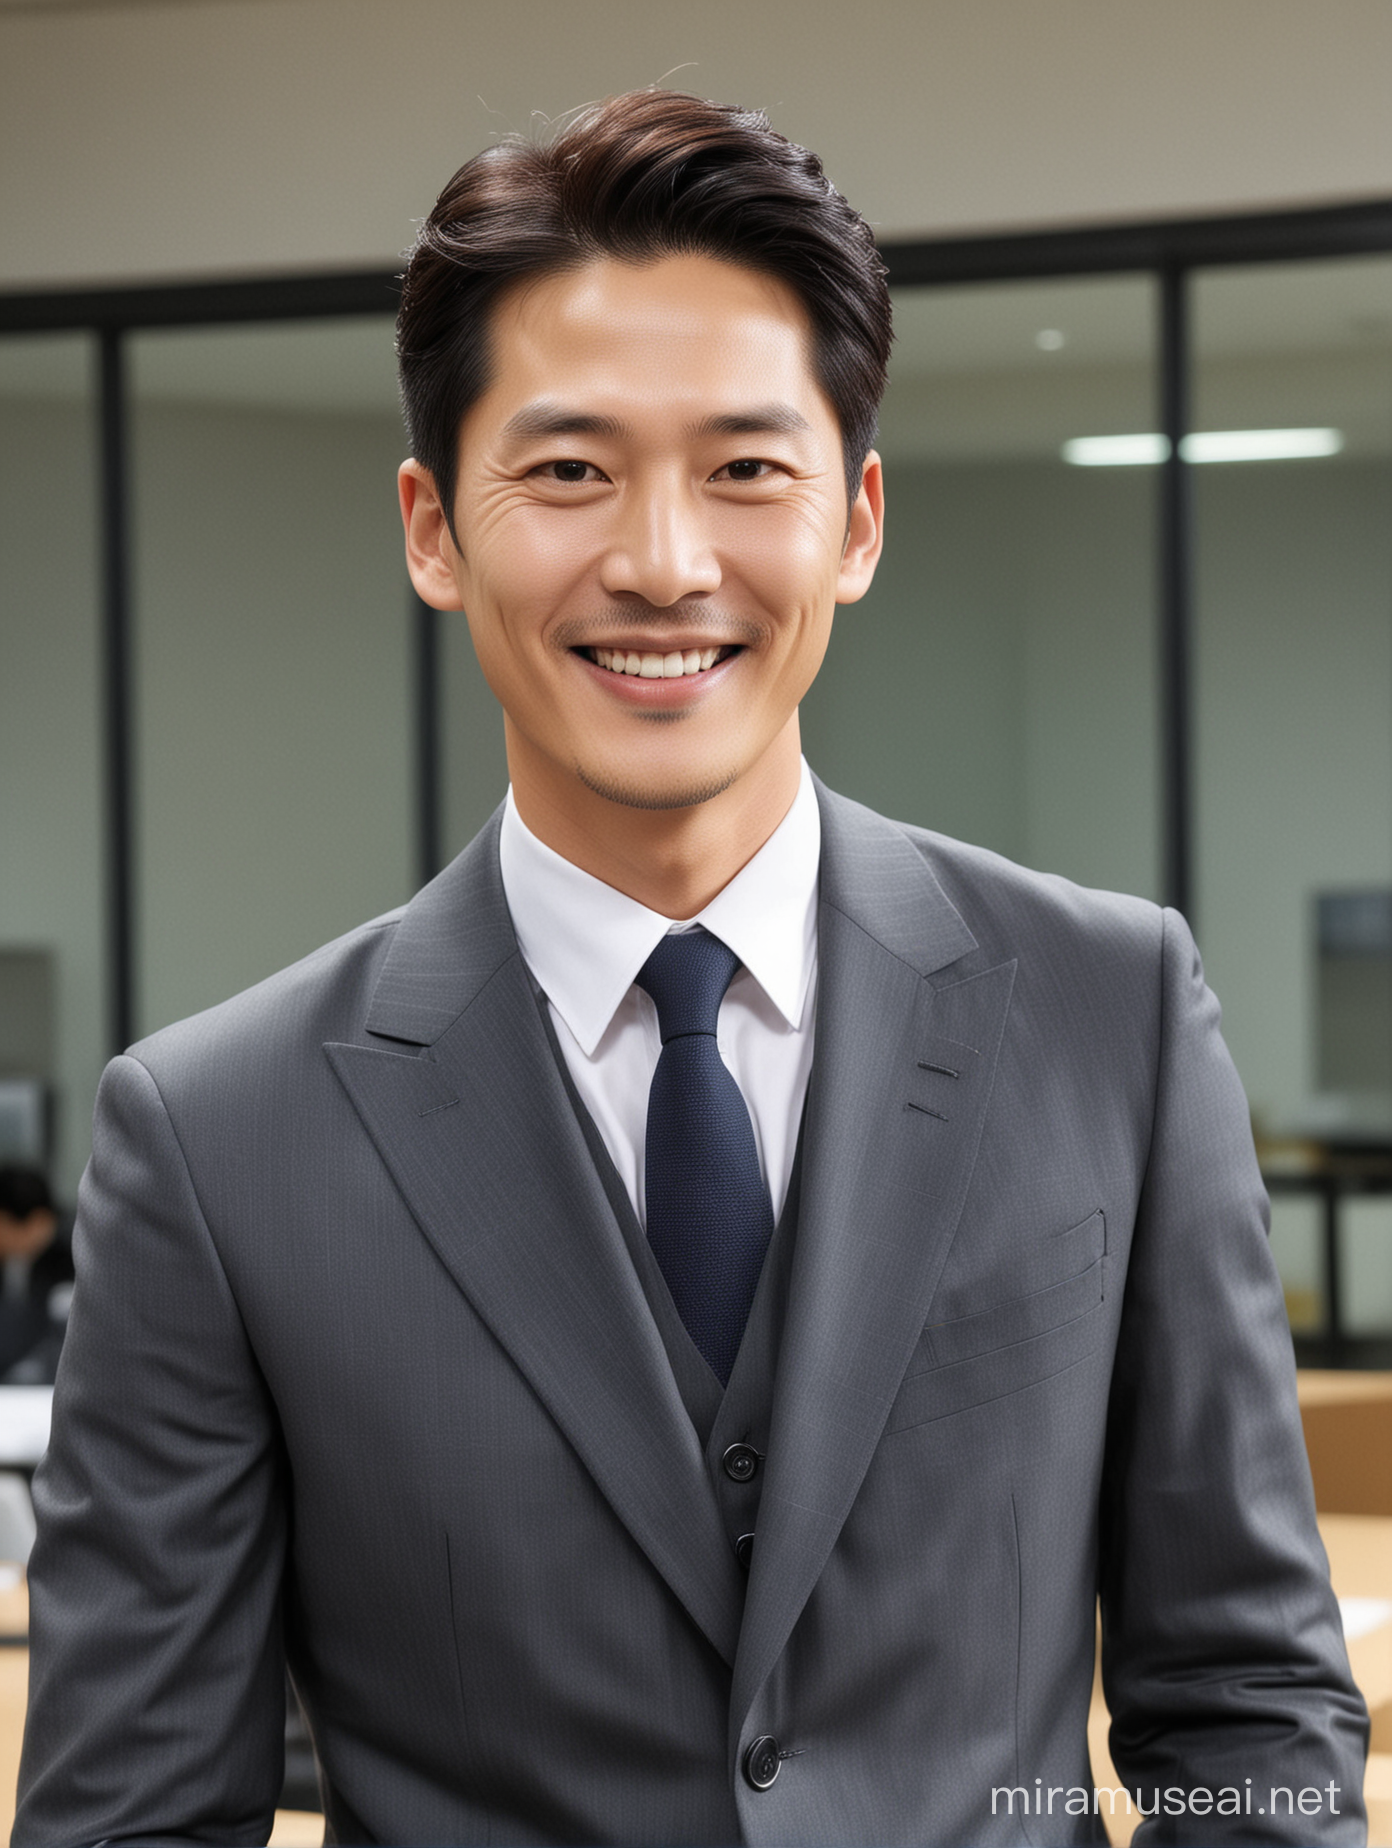 Smiling Korean Businessman Resembling Lee Jungjae in Office Setting